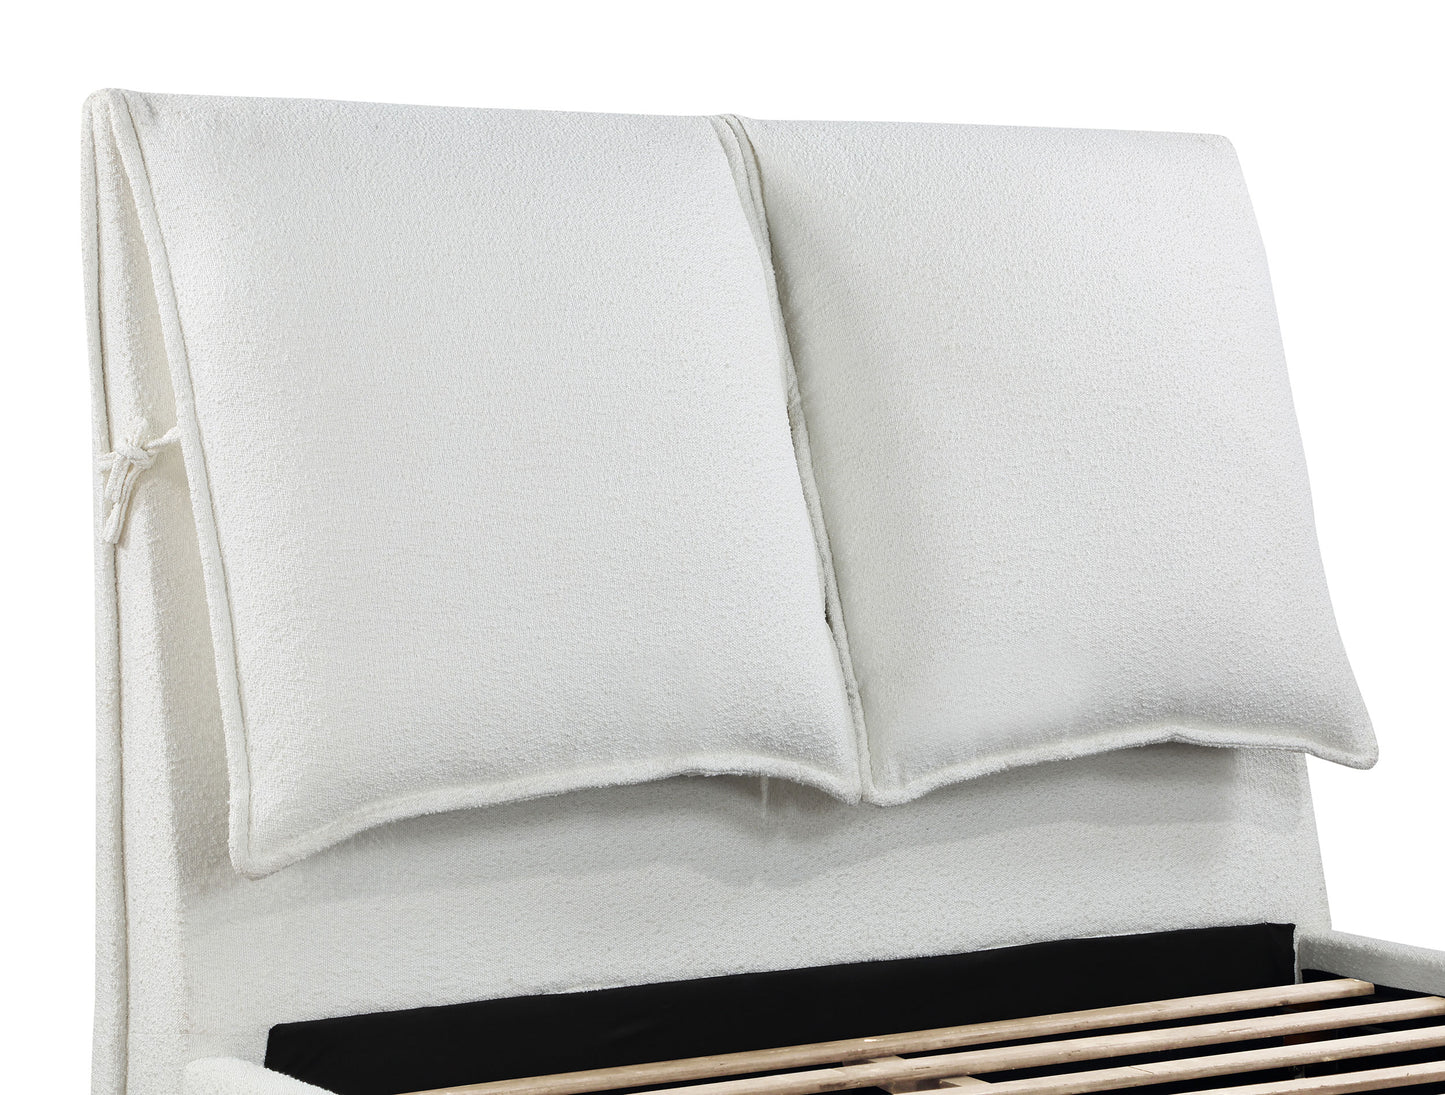 Gwendoline Upholstered Eastern King Panel Bed White